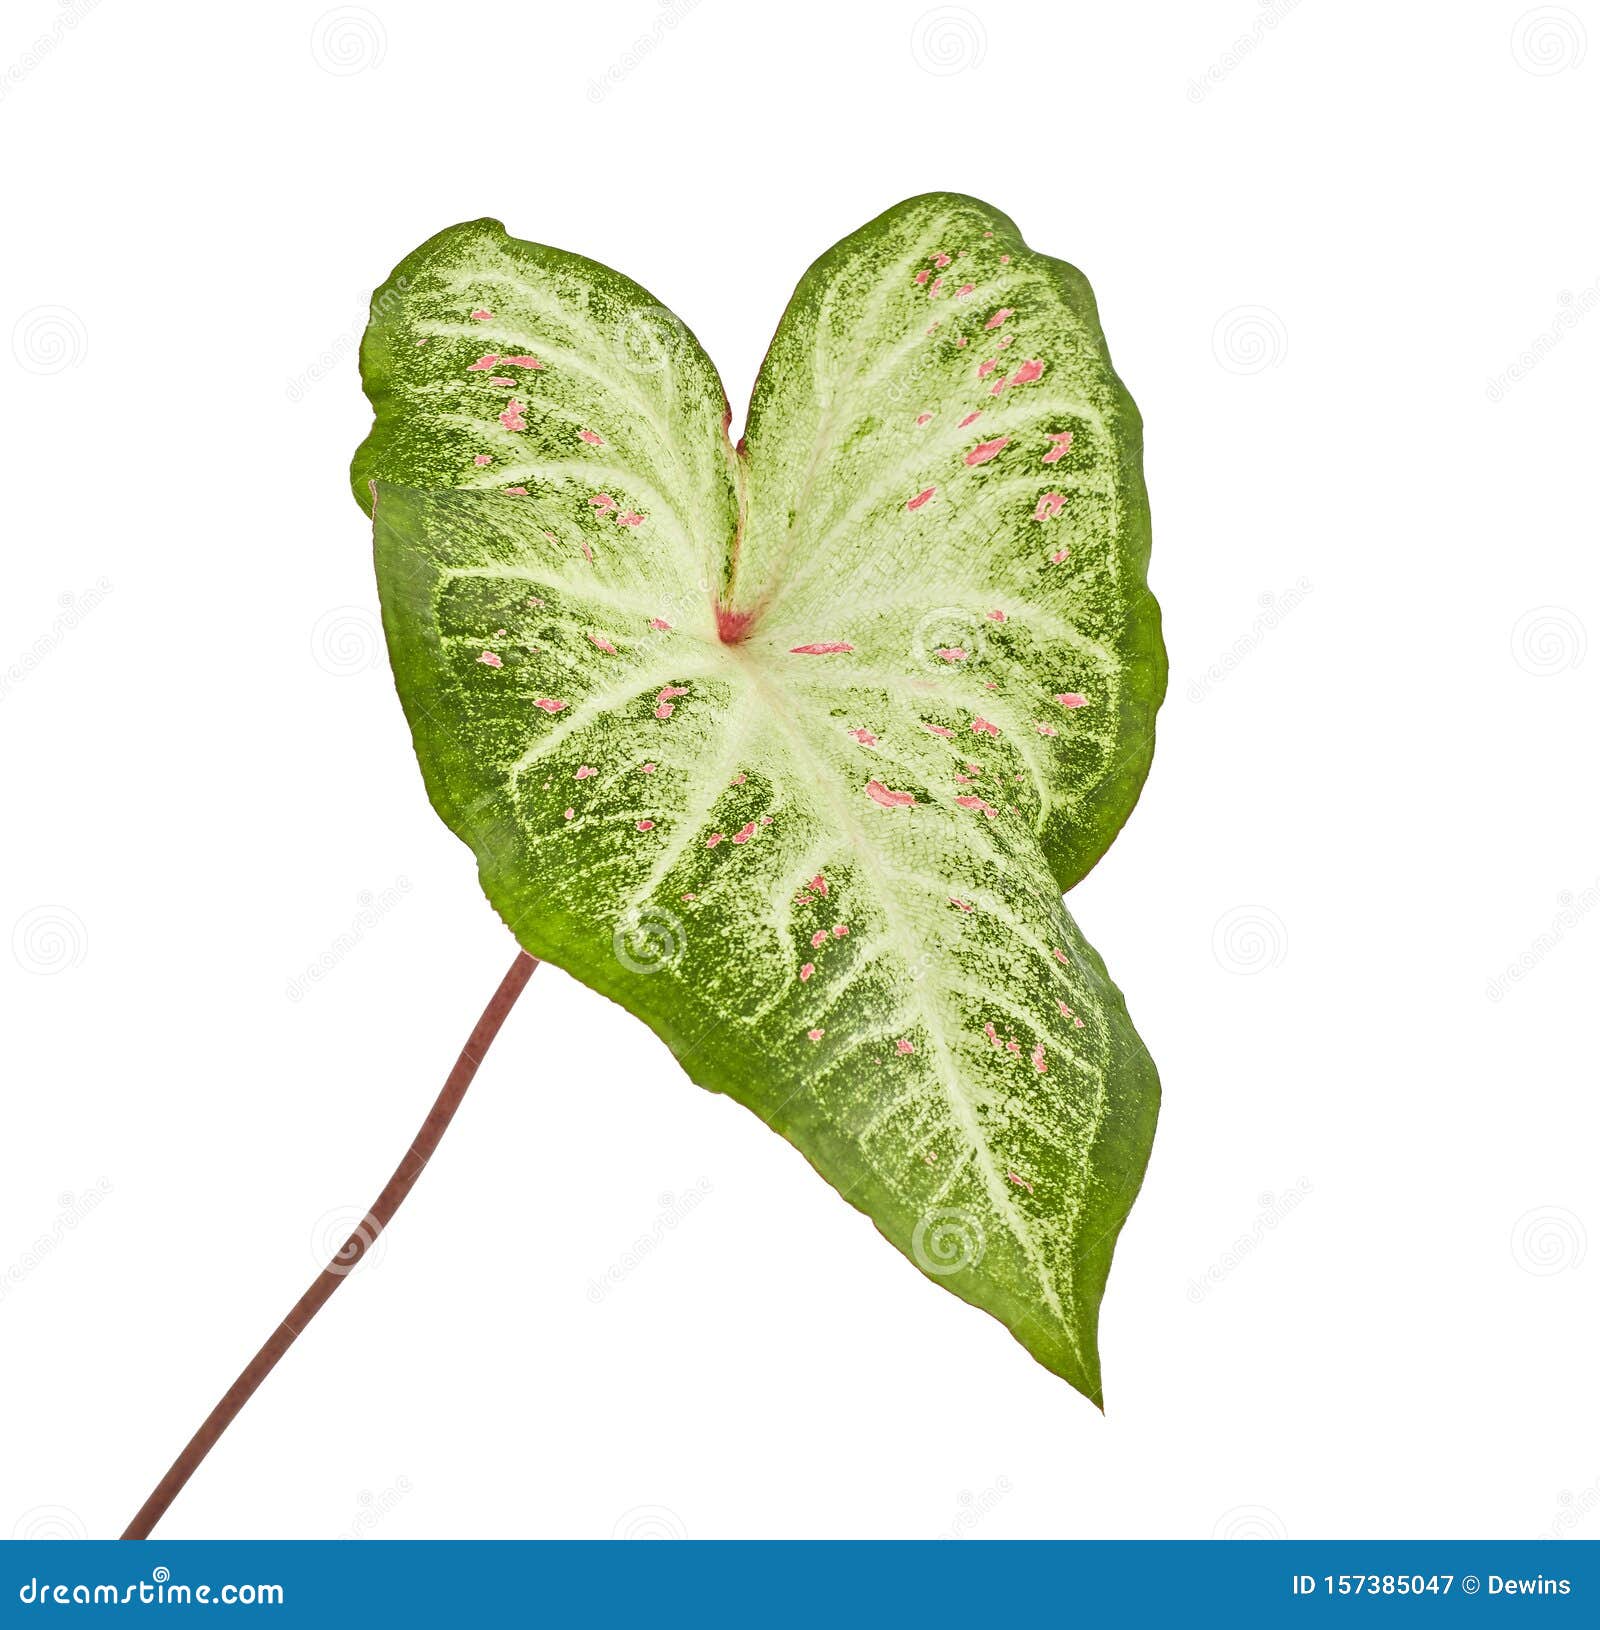 Caladium Bicolor With White Leaf And Green Veins Gingerland Caladium ...